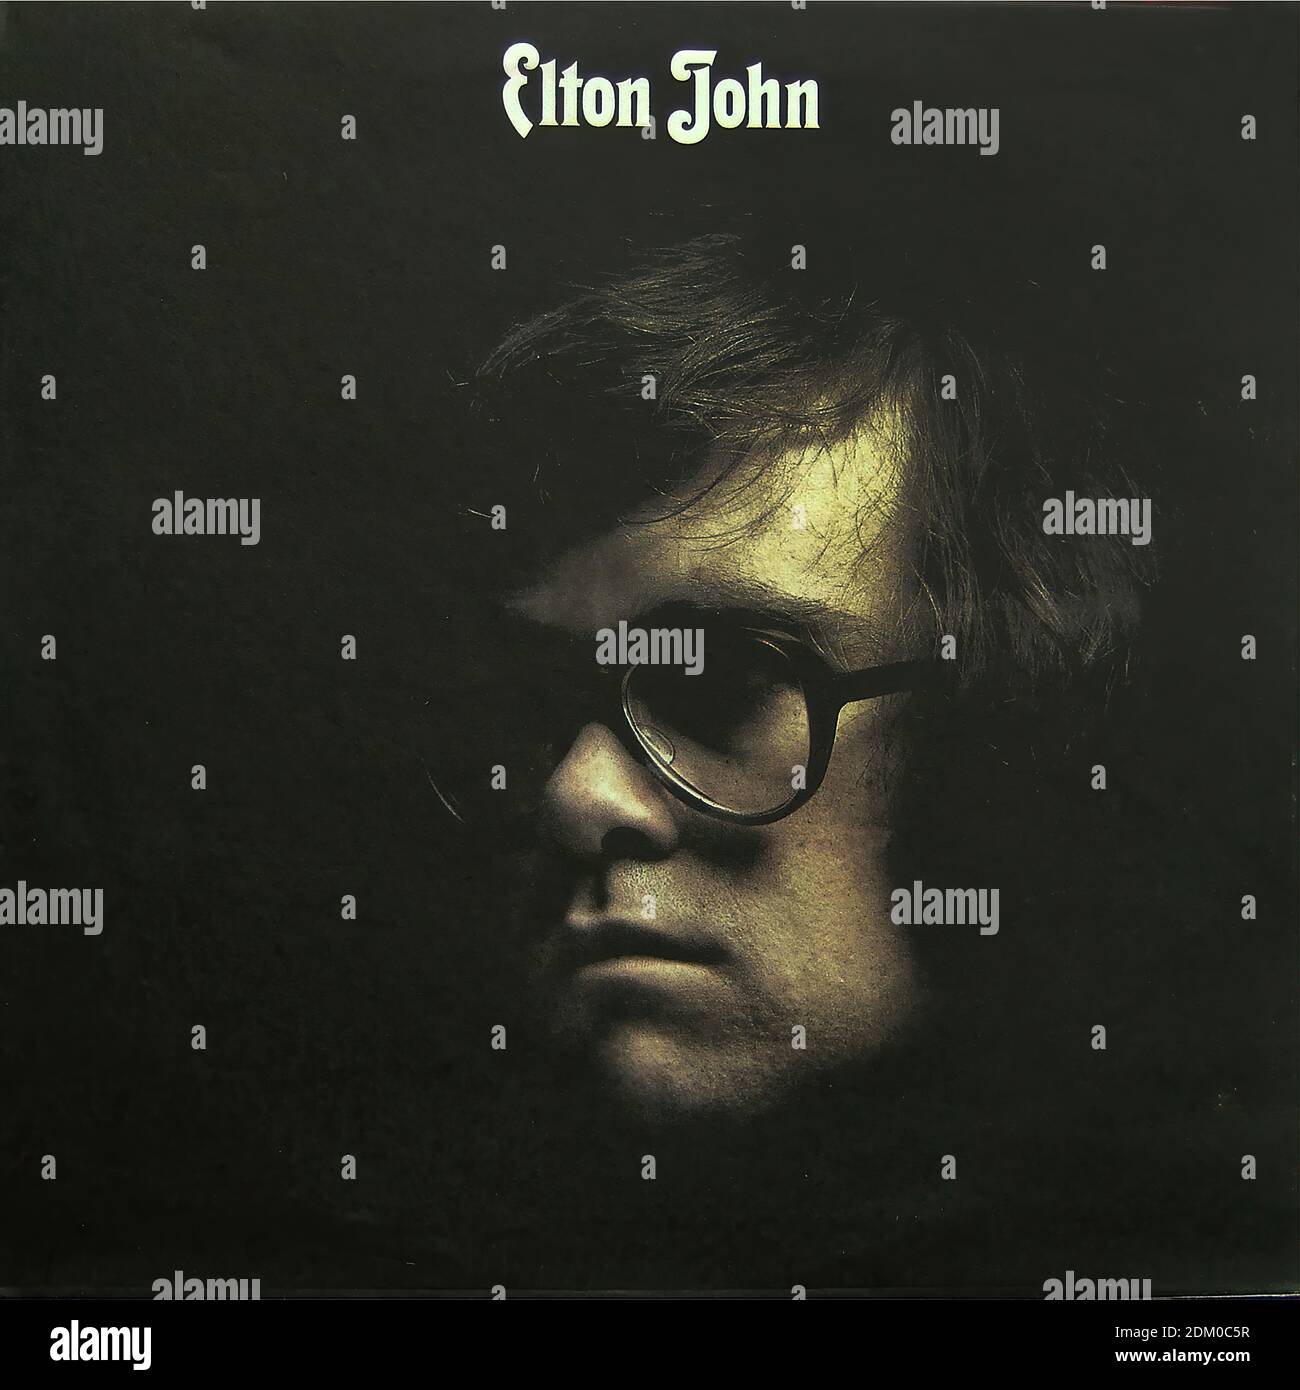 Elton John  1970 - Vintage vinyl album cover  4 Stock Photo